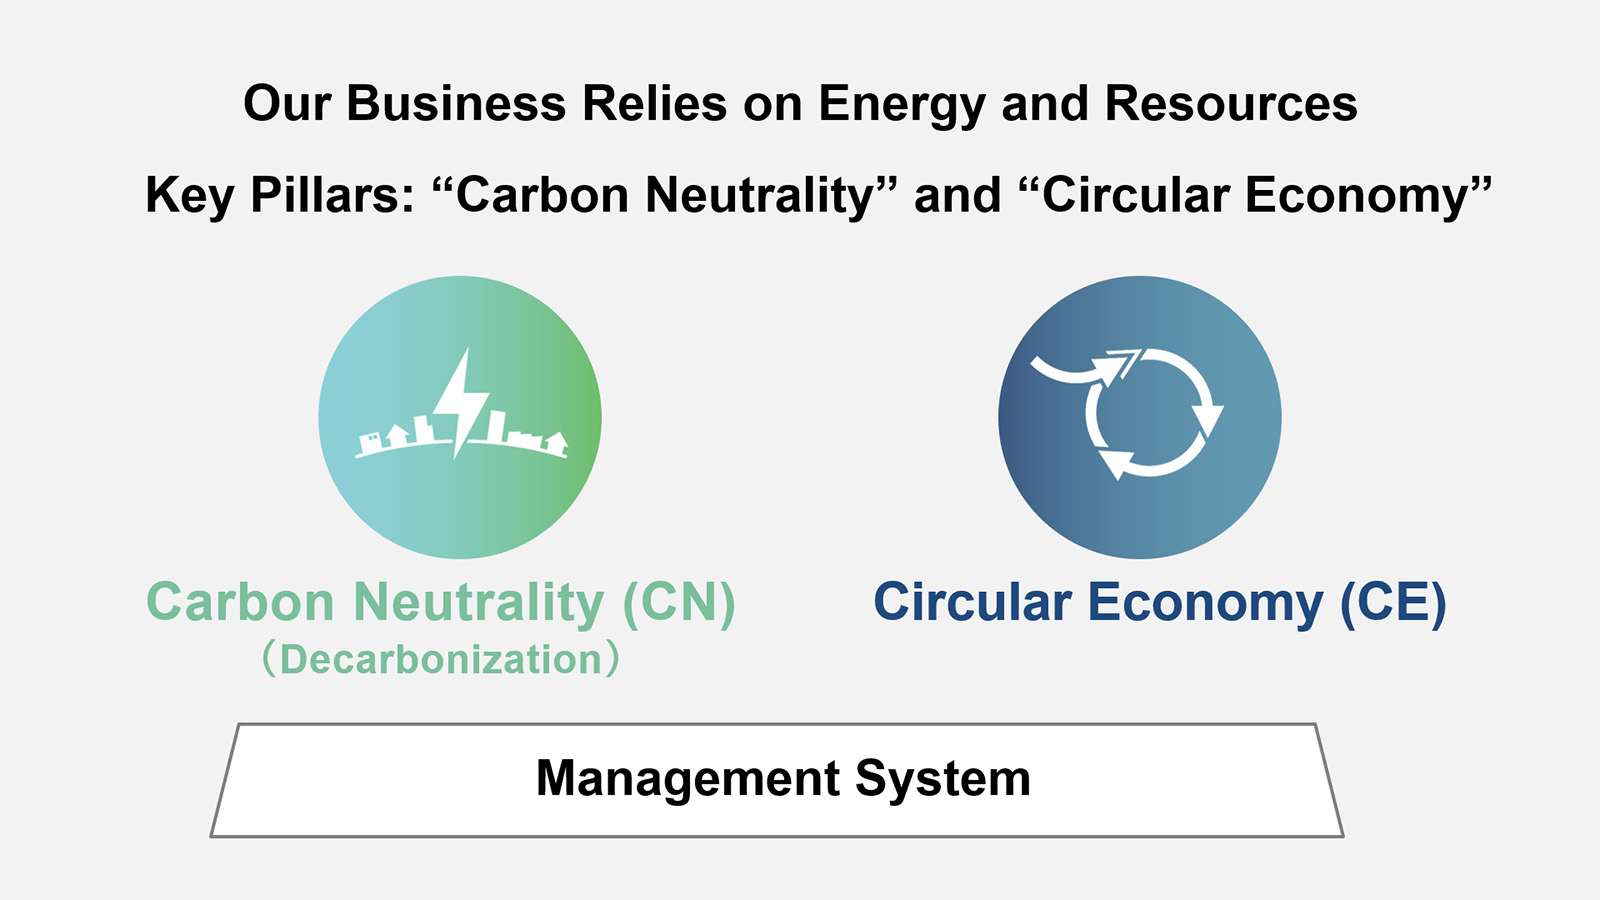 Illustration: Panasonic’s GX strategy emphasizing both carbon neutrality and circular economy